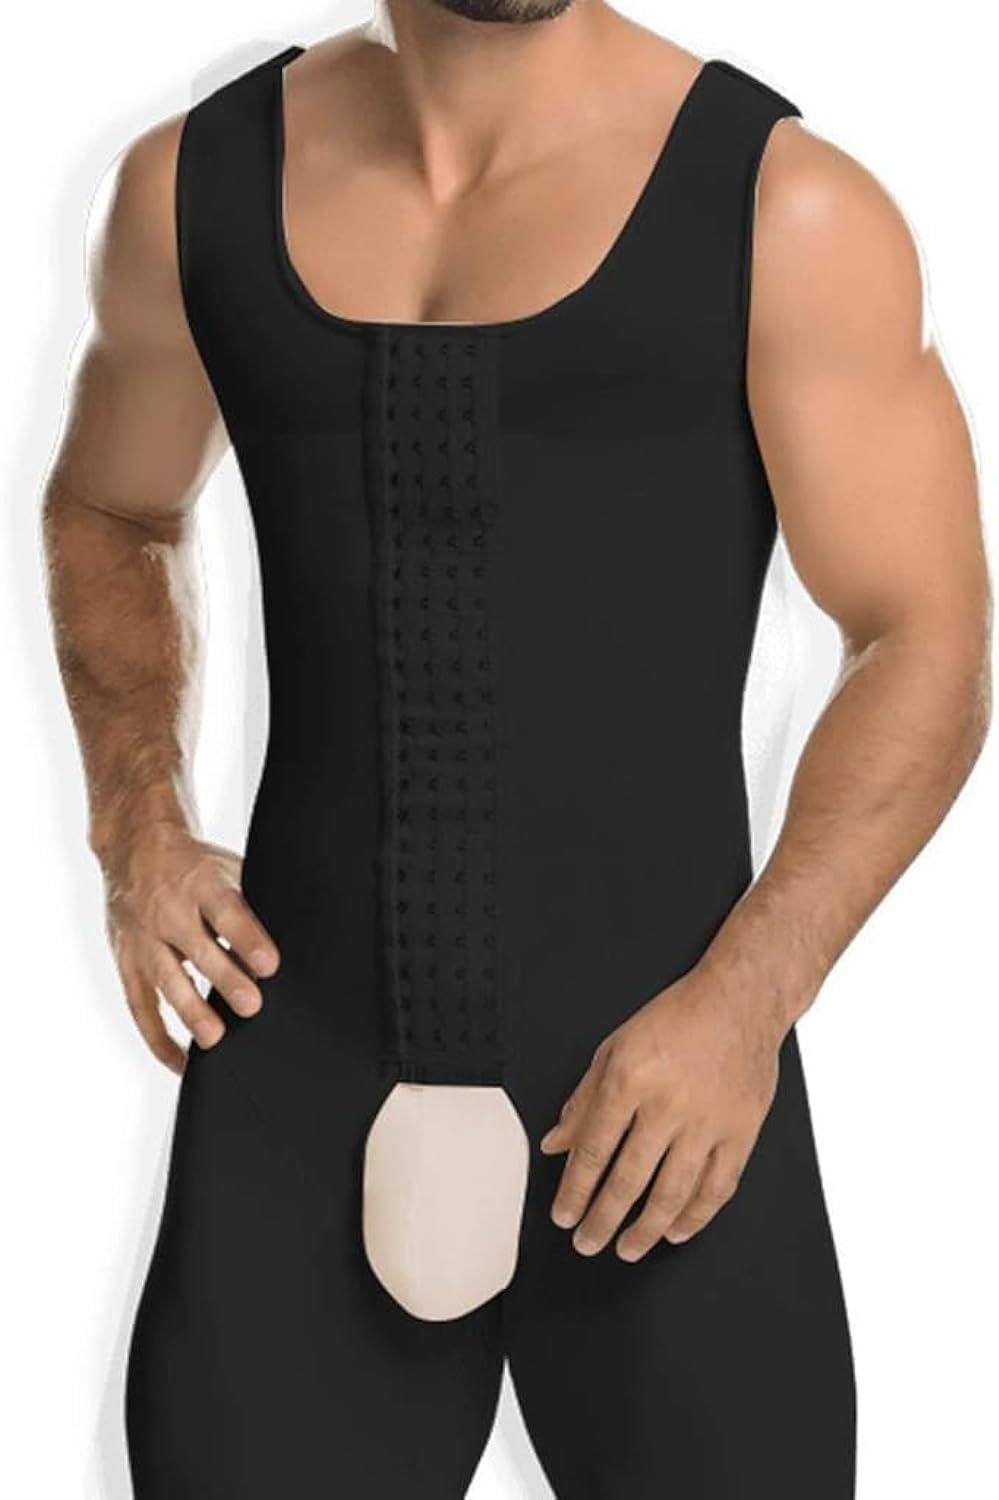 E00552- Men’s post liposuction faja(corset)